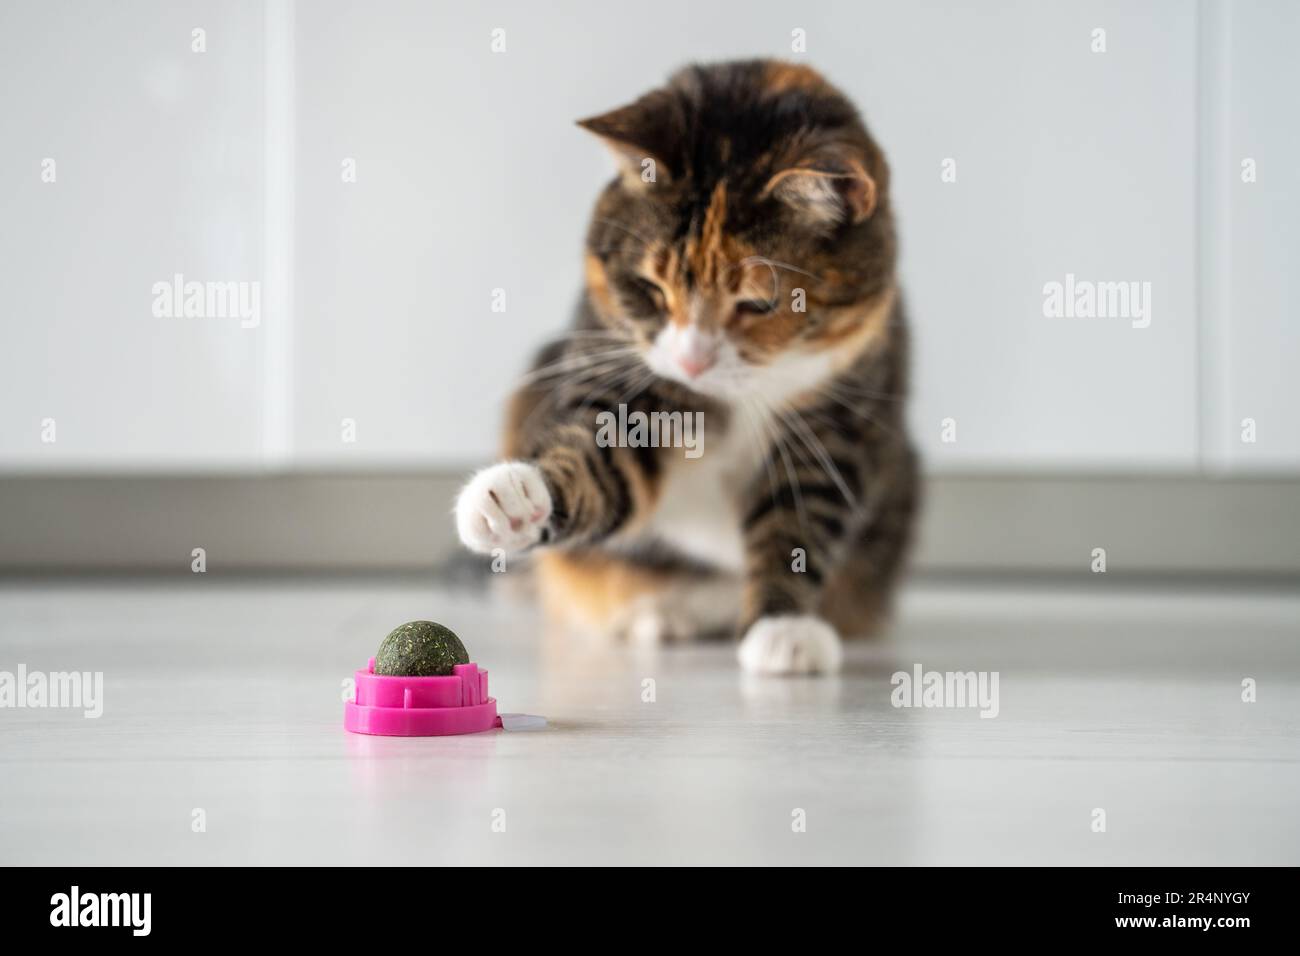 Bunte Katzenspiele mit dem Ball aus dunkelgrüner Katzenminze oder Katzenwurz zieht die Pfote in Richtung Katzenminze. Stockfoto